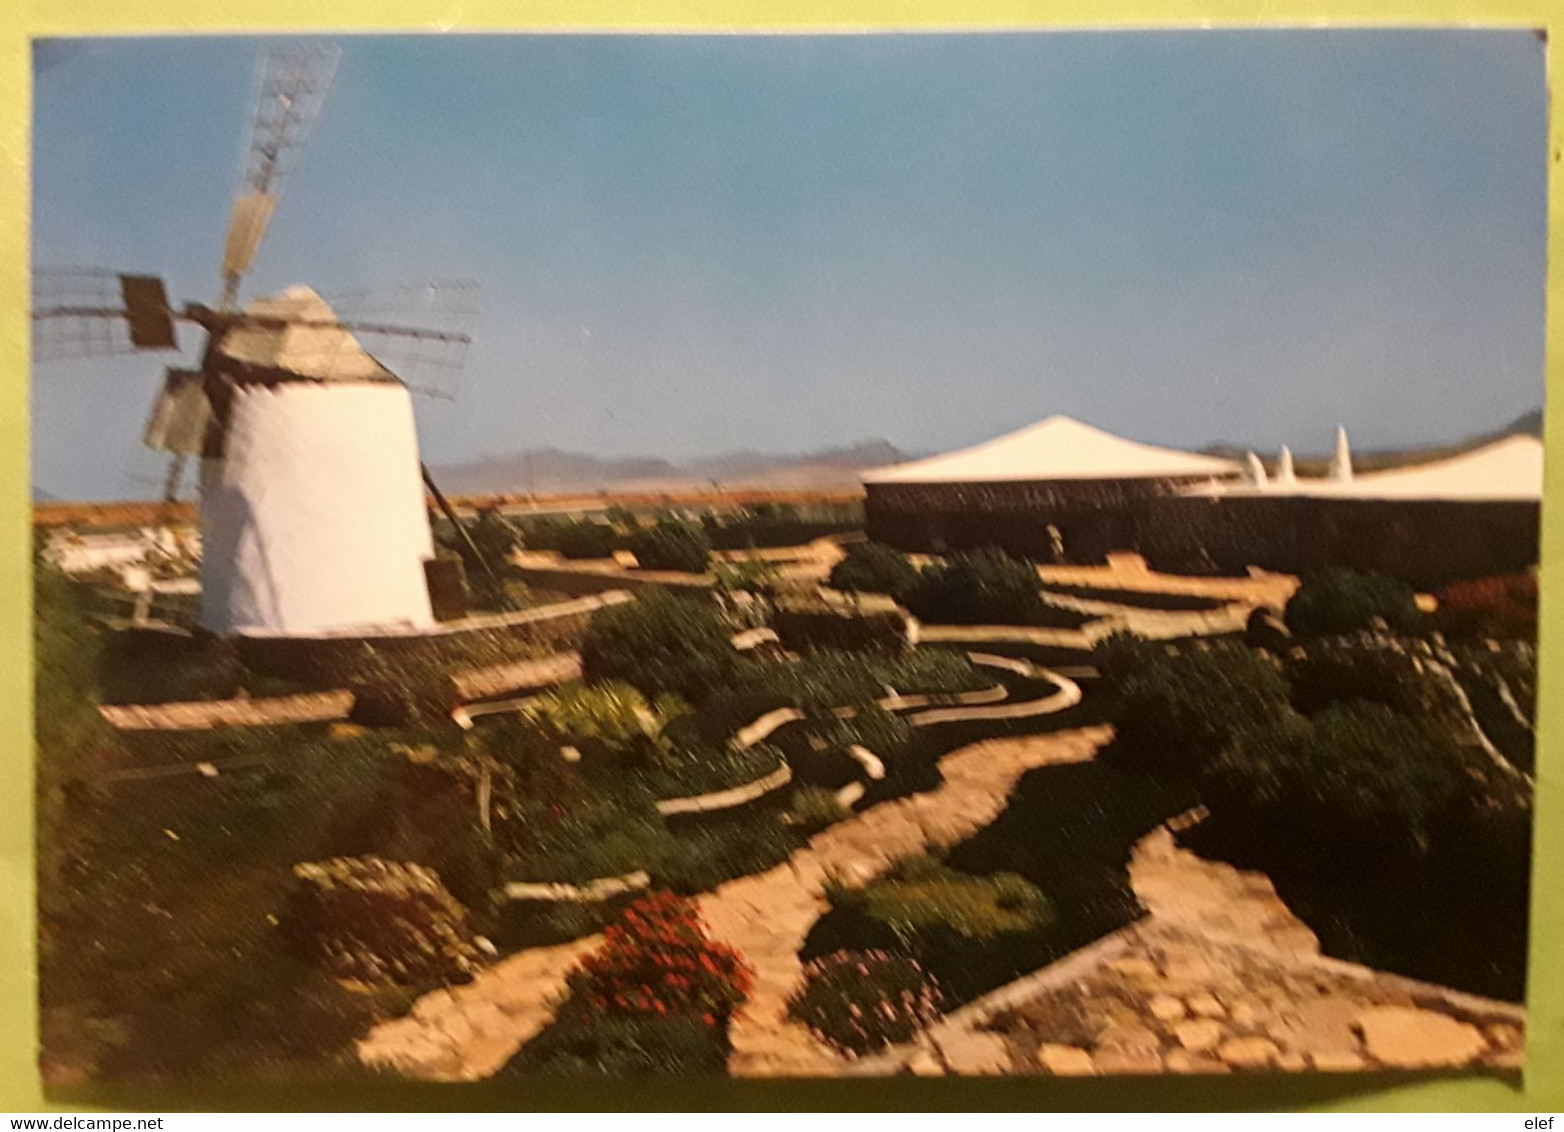 FUERTEVENTURA , Canarias Espana , Molino Tipico Moulin à Vent Windmill Windmuhle , Timbre Sello AHORRE ENERGIA 1980, TB - Fuerteventura